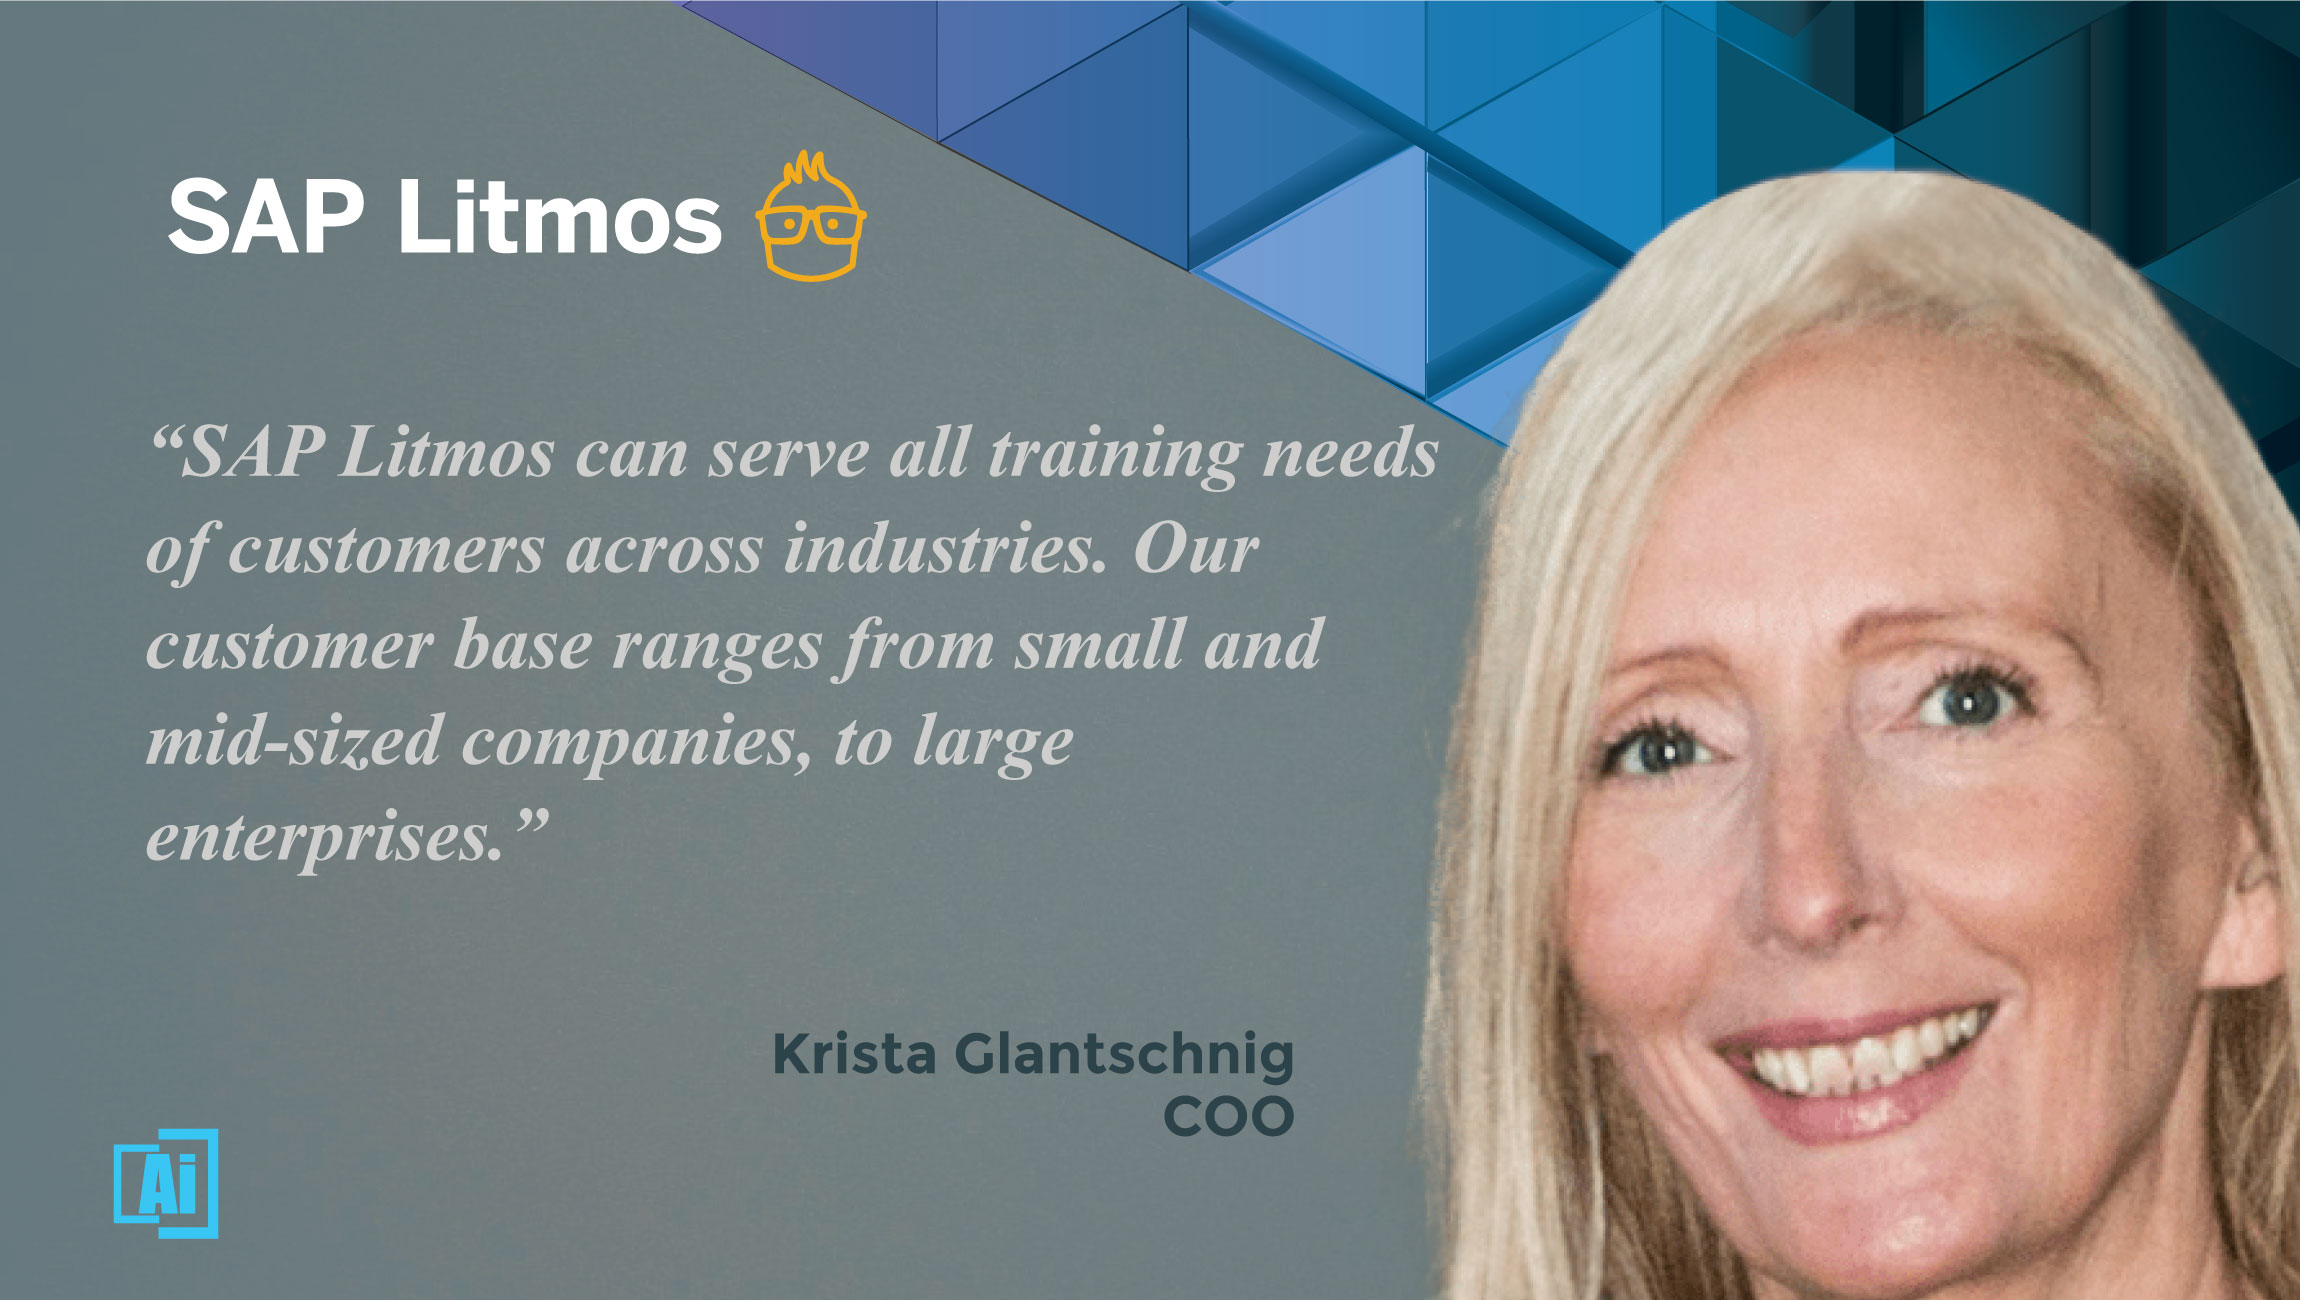 AiThority Interview With Krista Glantschnig, COO at SAP Litmos